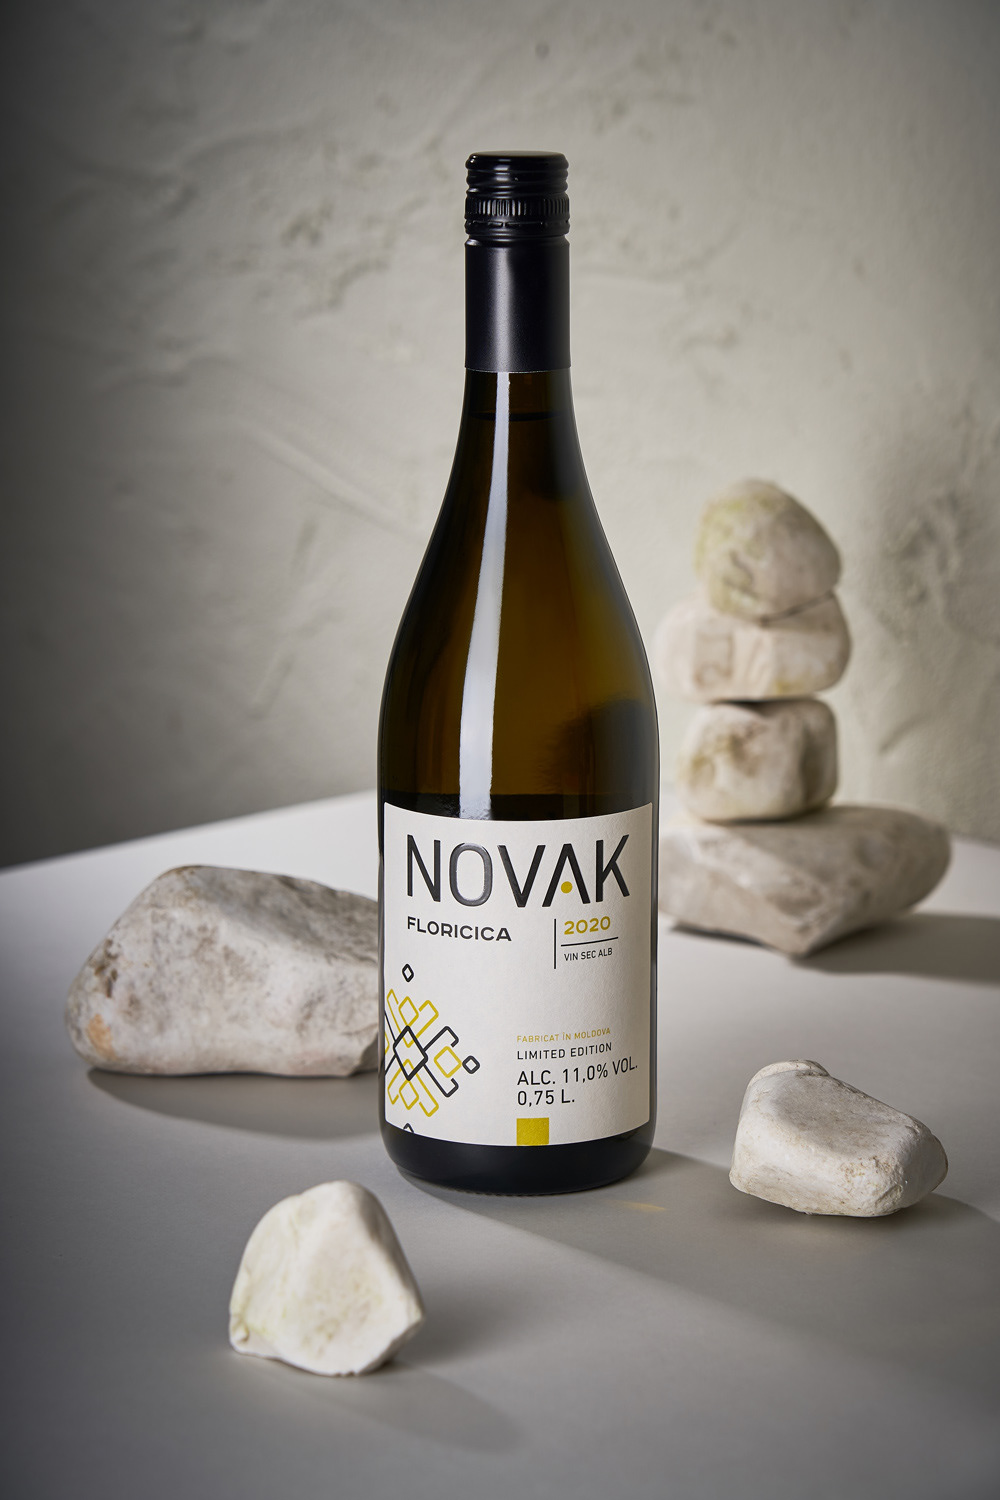 43oz design studio Ethnic label design Moldova novak winery Packaging packaging design wine wine label